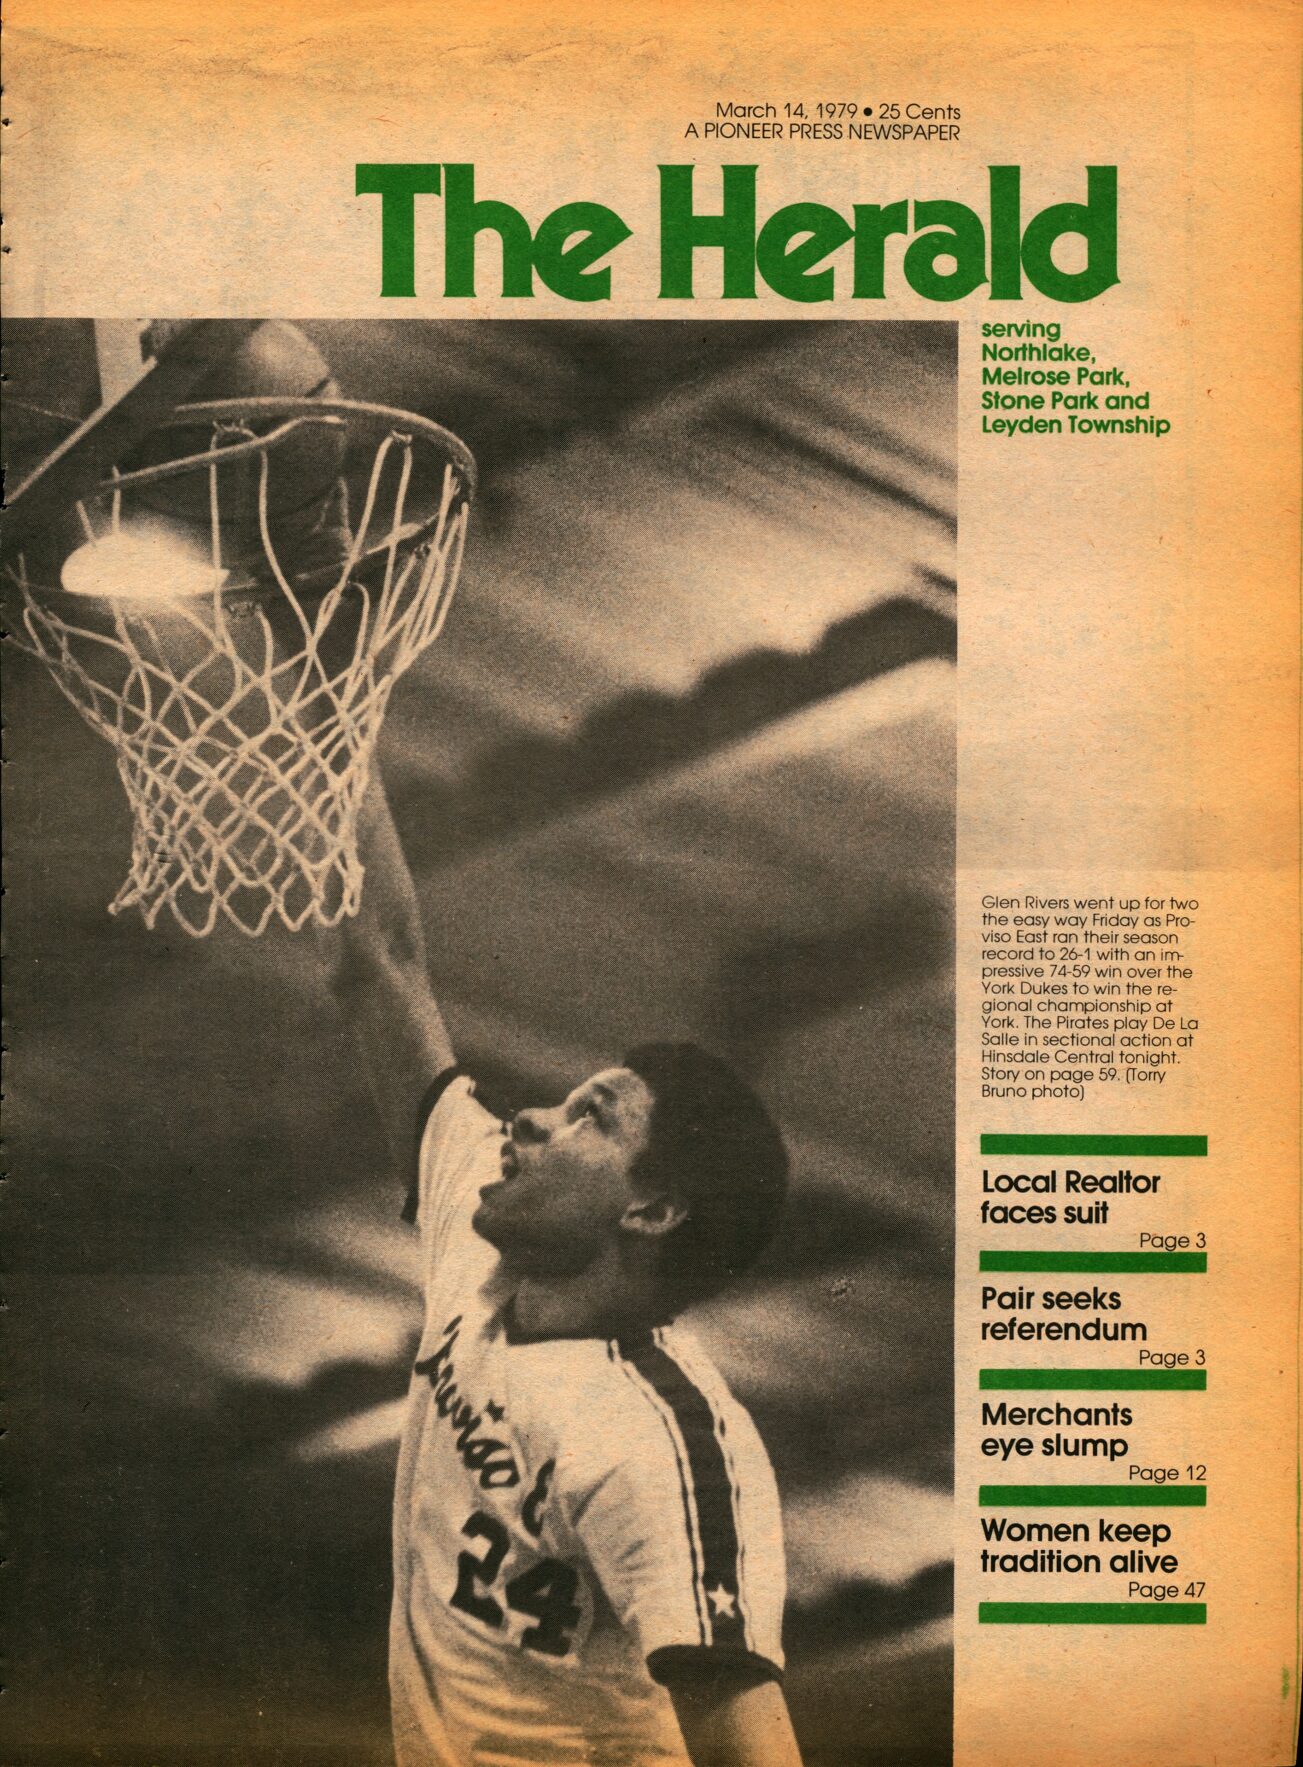 The Herald – 19790314